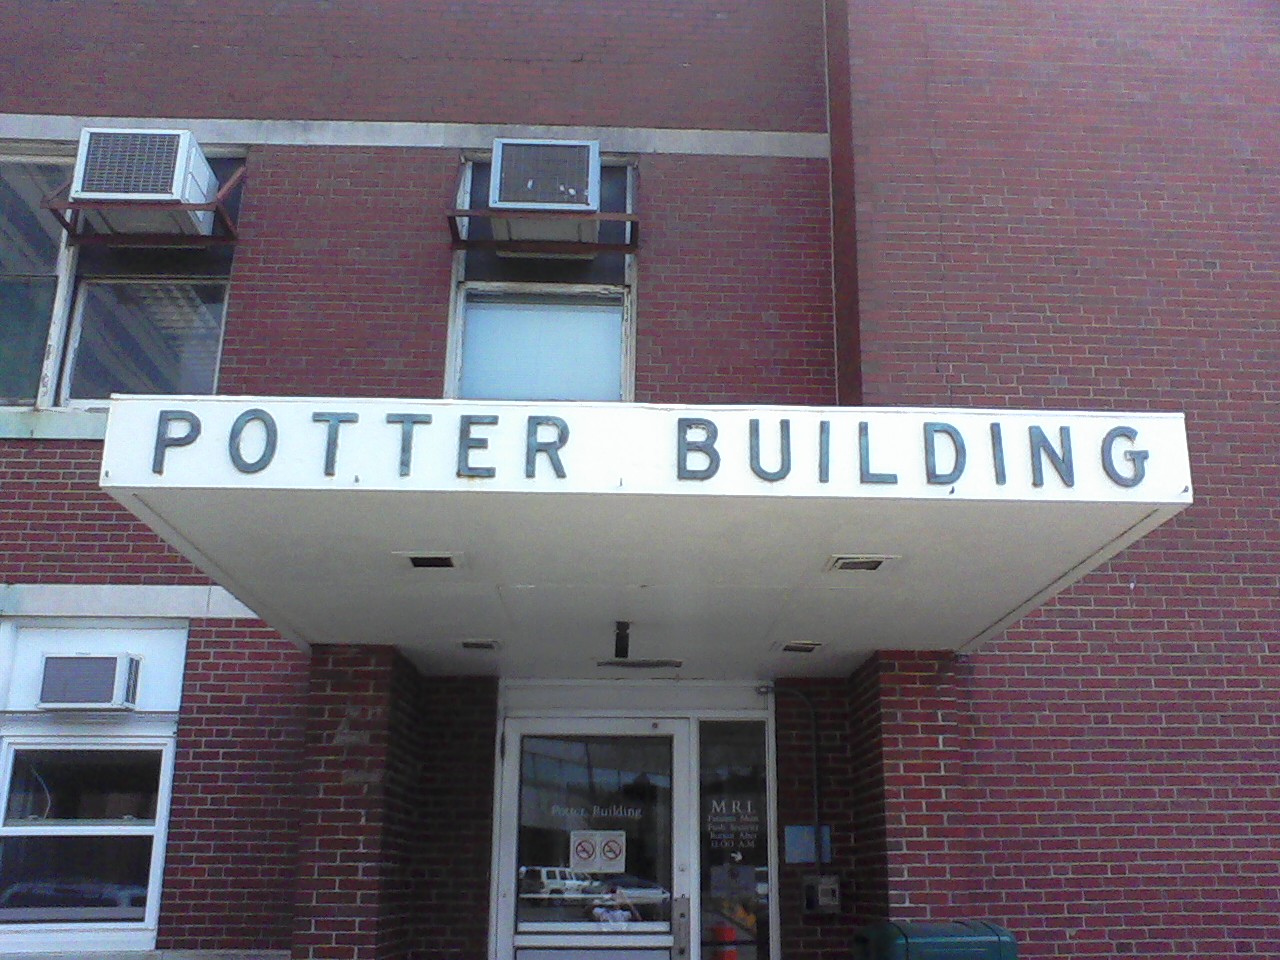 https://blogger.googleusercontent.com/img/b/R29vZ2xl/AVvXsEjSzryhGq5GNt9IxgGt42Bv_N8Ln8oNzJ_pb4v83b6OKhreguDSRZNT0tAnvXZ6a0N2qoqhFTl1cCXSDACc66sWOp4ANZa6QqcSjz4nntI5C0RDkrOZ7sEHb8aLBIwttIjZYaUdwp53ndZo/s1600/Potter+Building.jpg